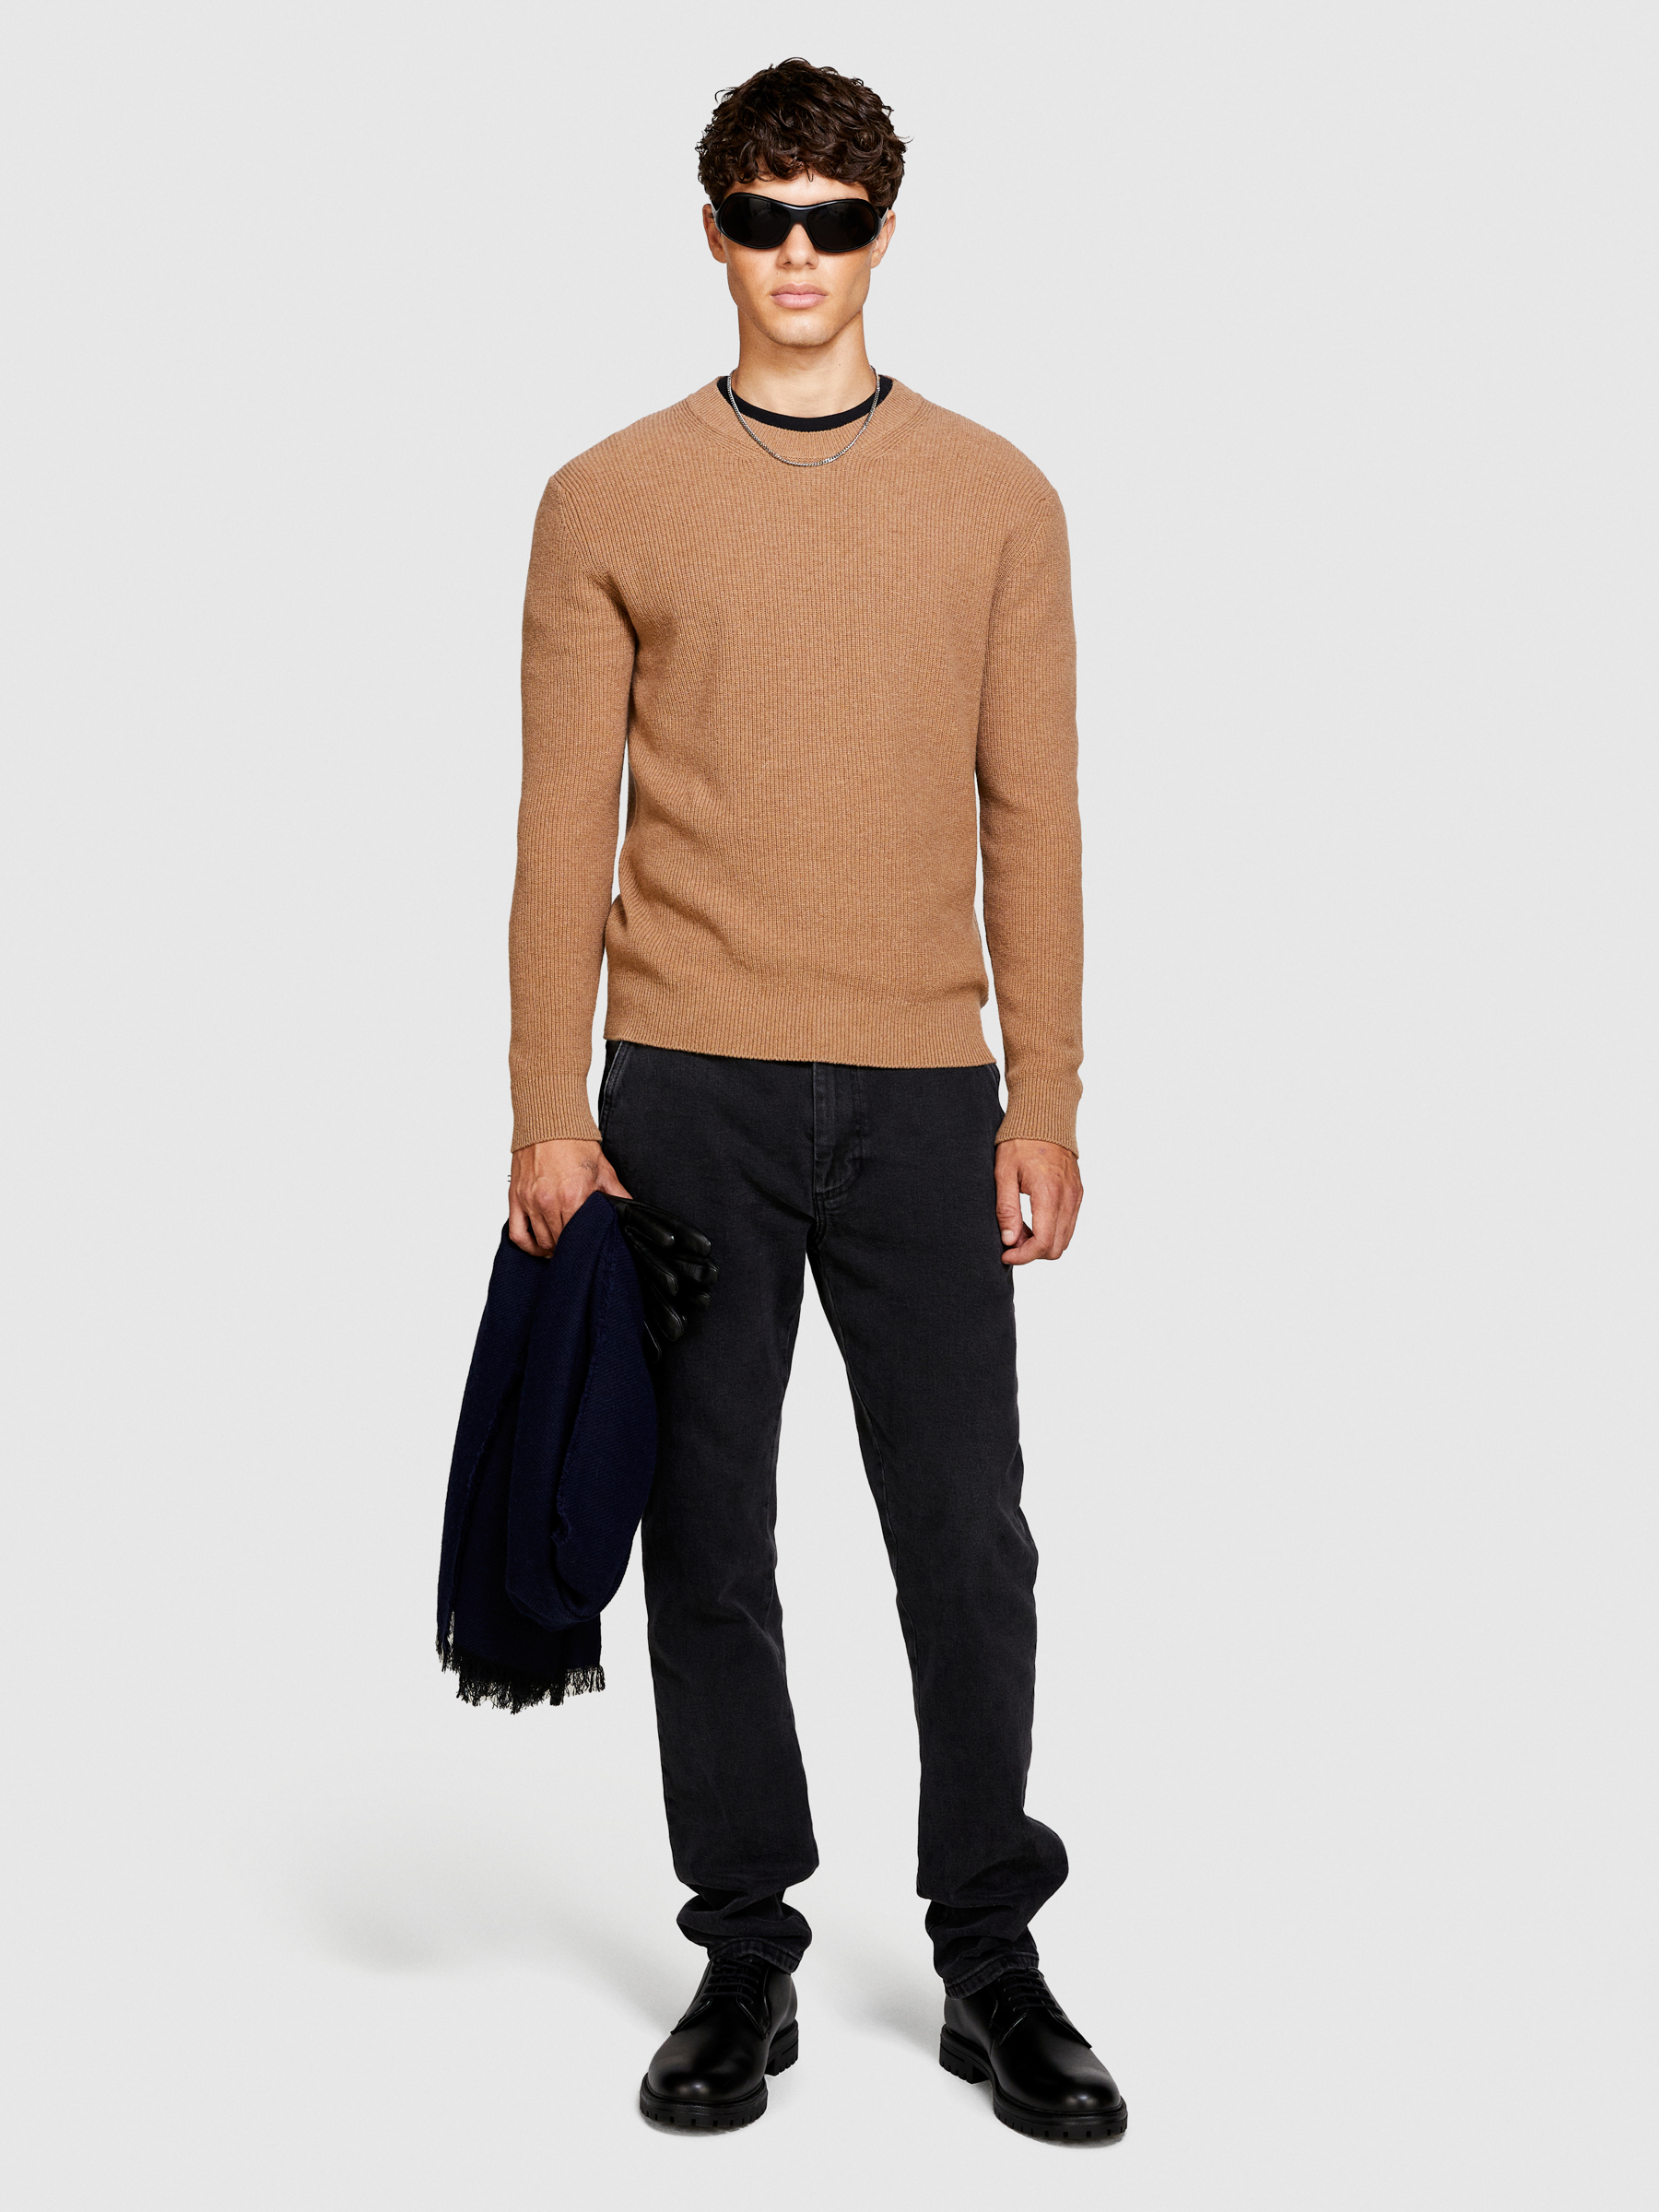 Sisley - Regular Fit Crew Neck Sweater, Man, Camel, Size: M